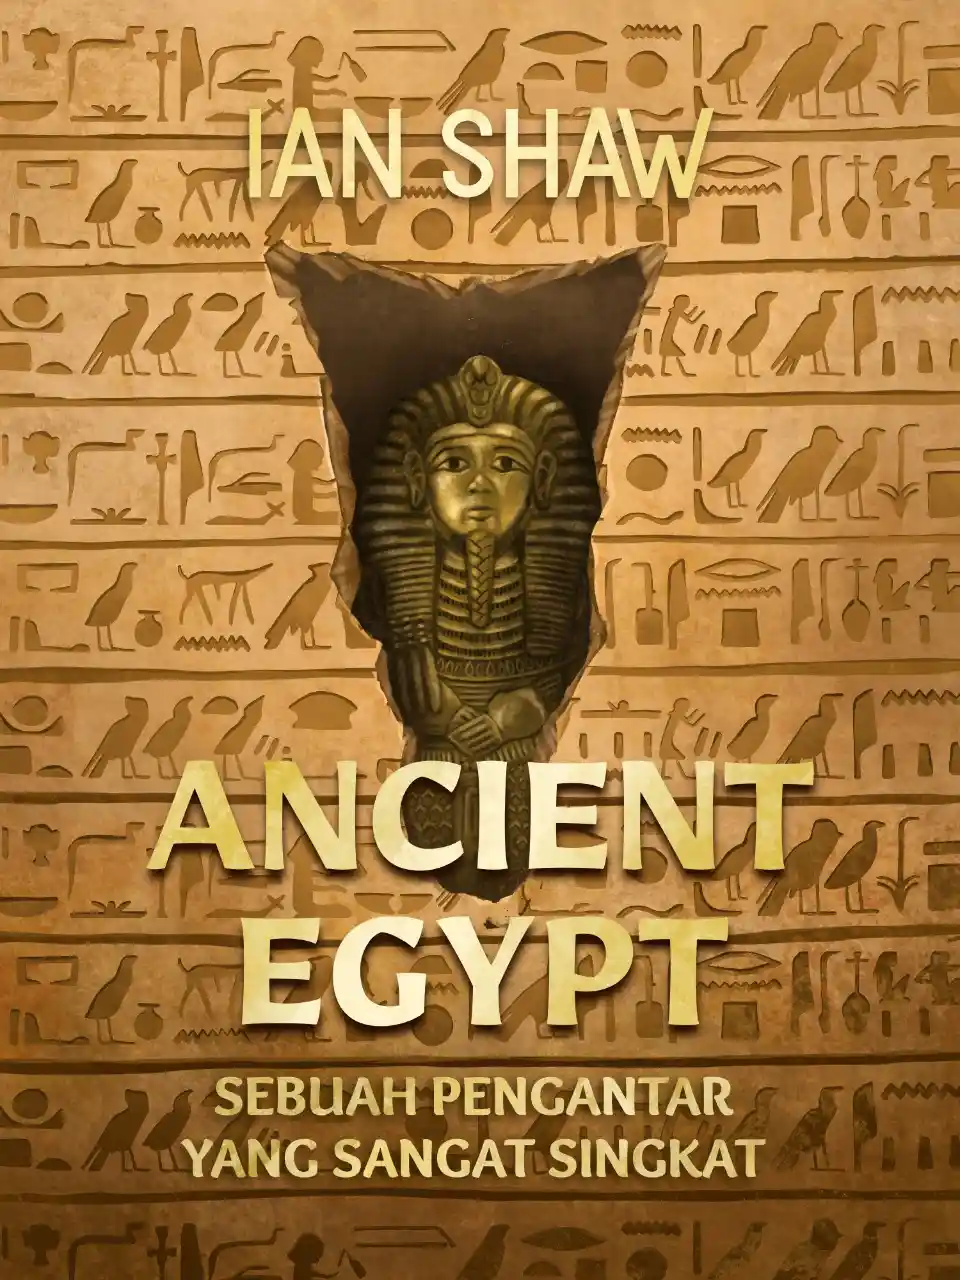 #6 Kultus Osiris mengembangkan praktik pemakaman yang rumit sebagai pintu masuk ke alam baka.